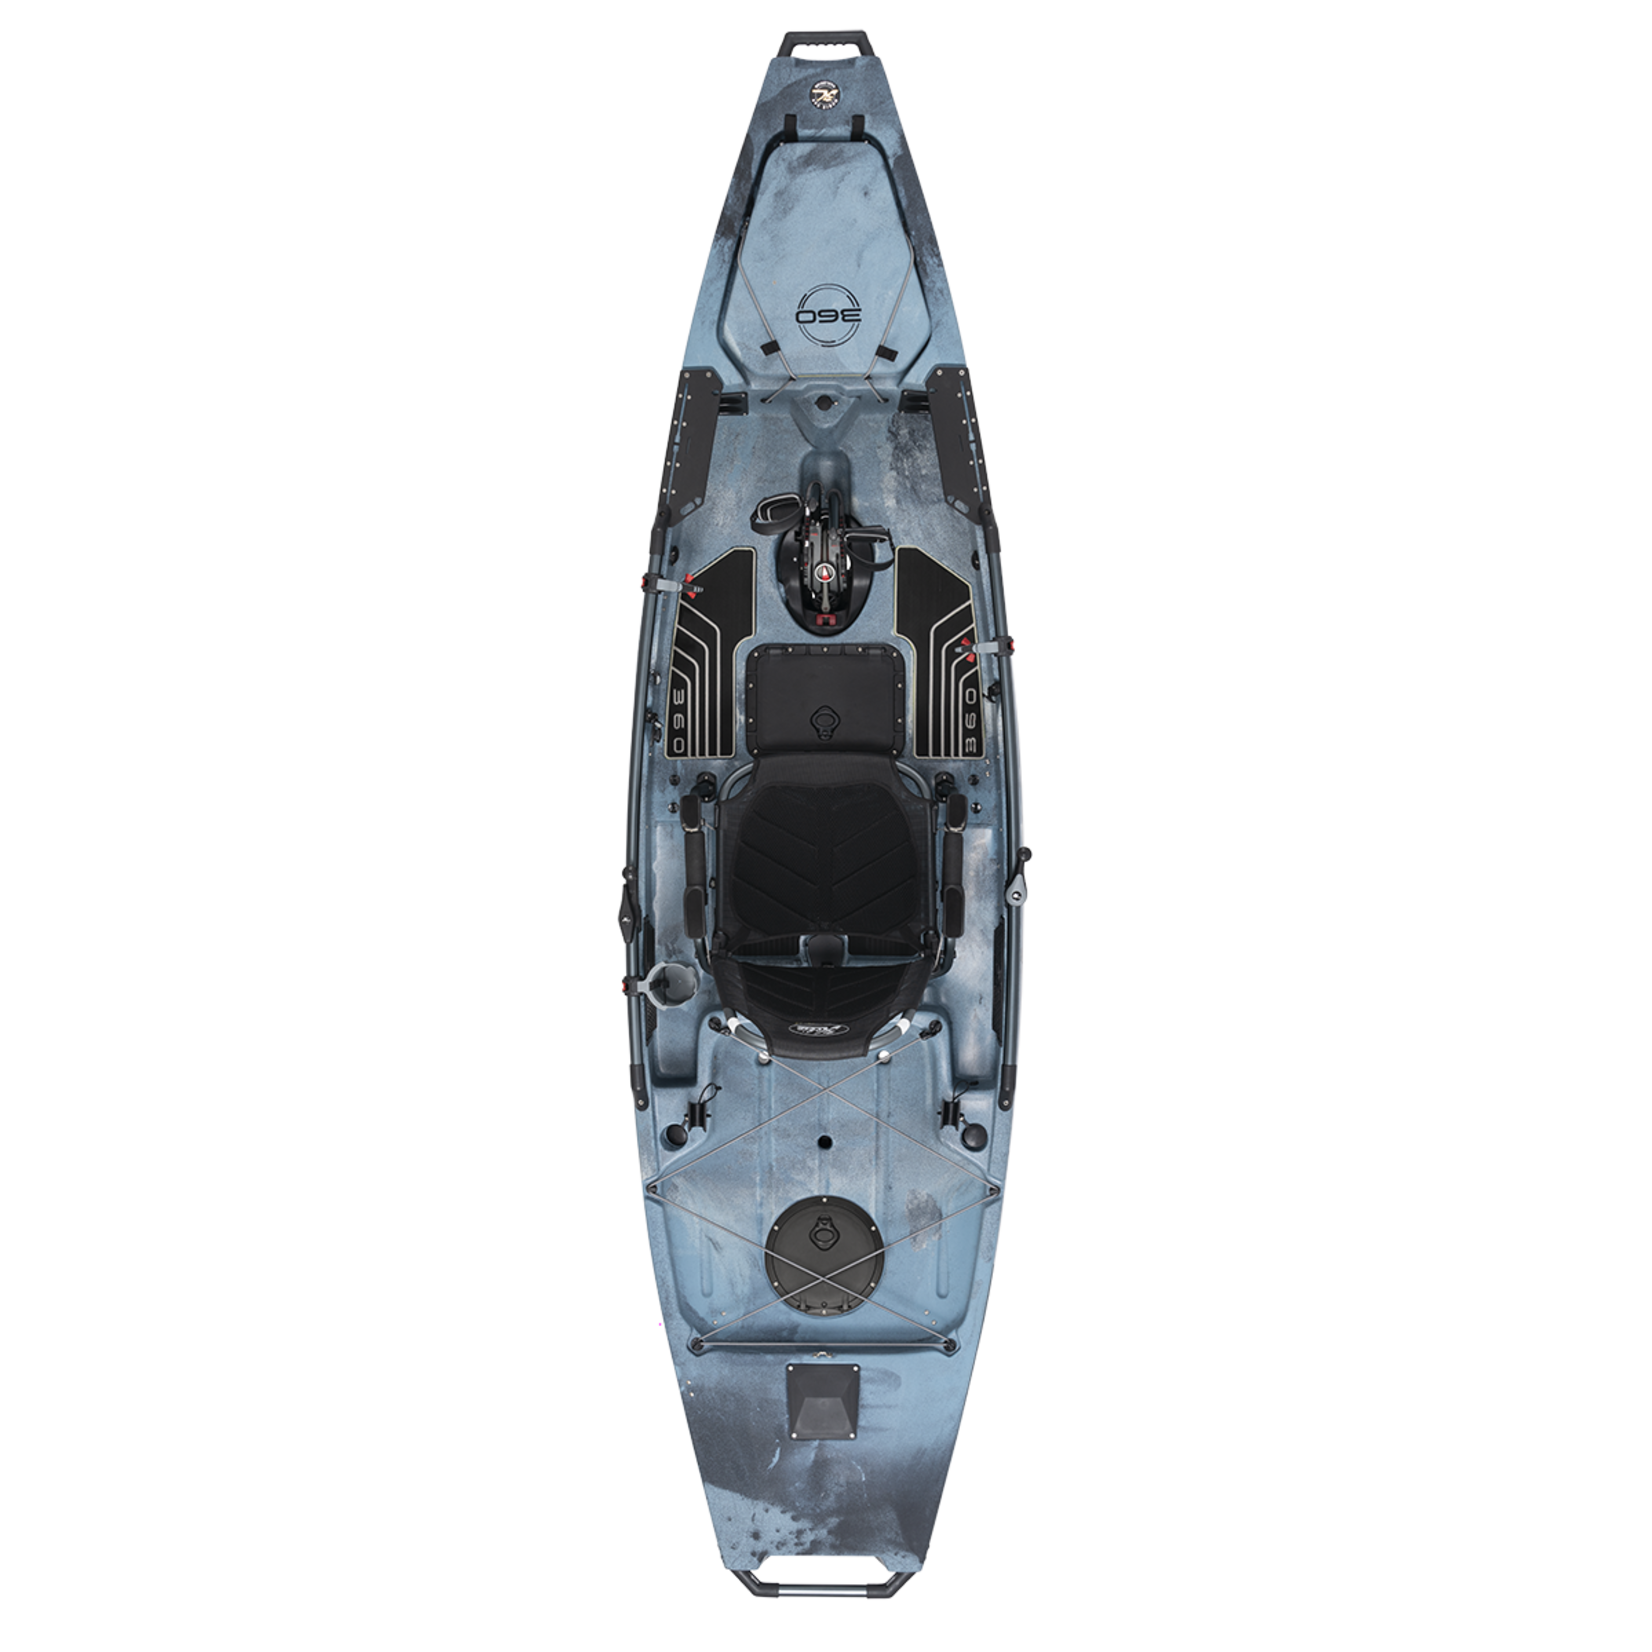 Hobie Mirage Pro Angler 14 Kayak (Camo)